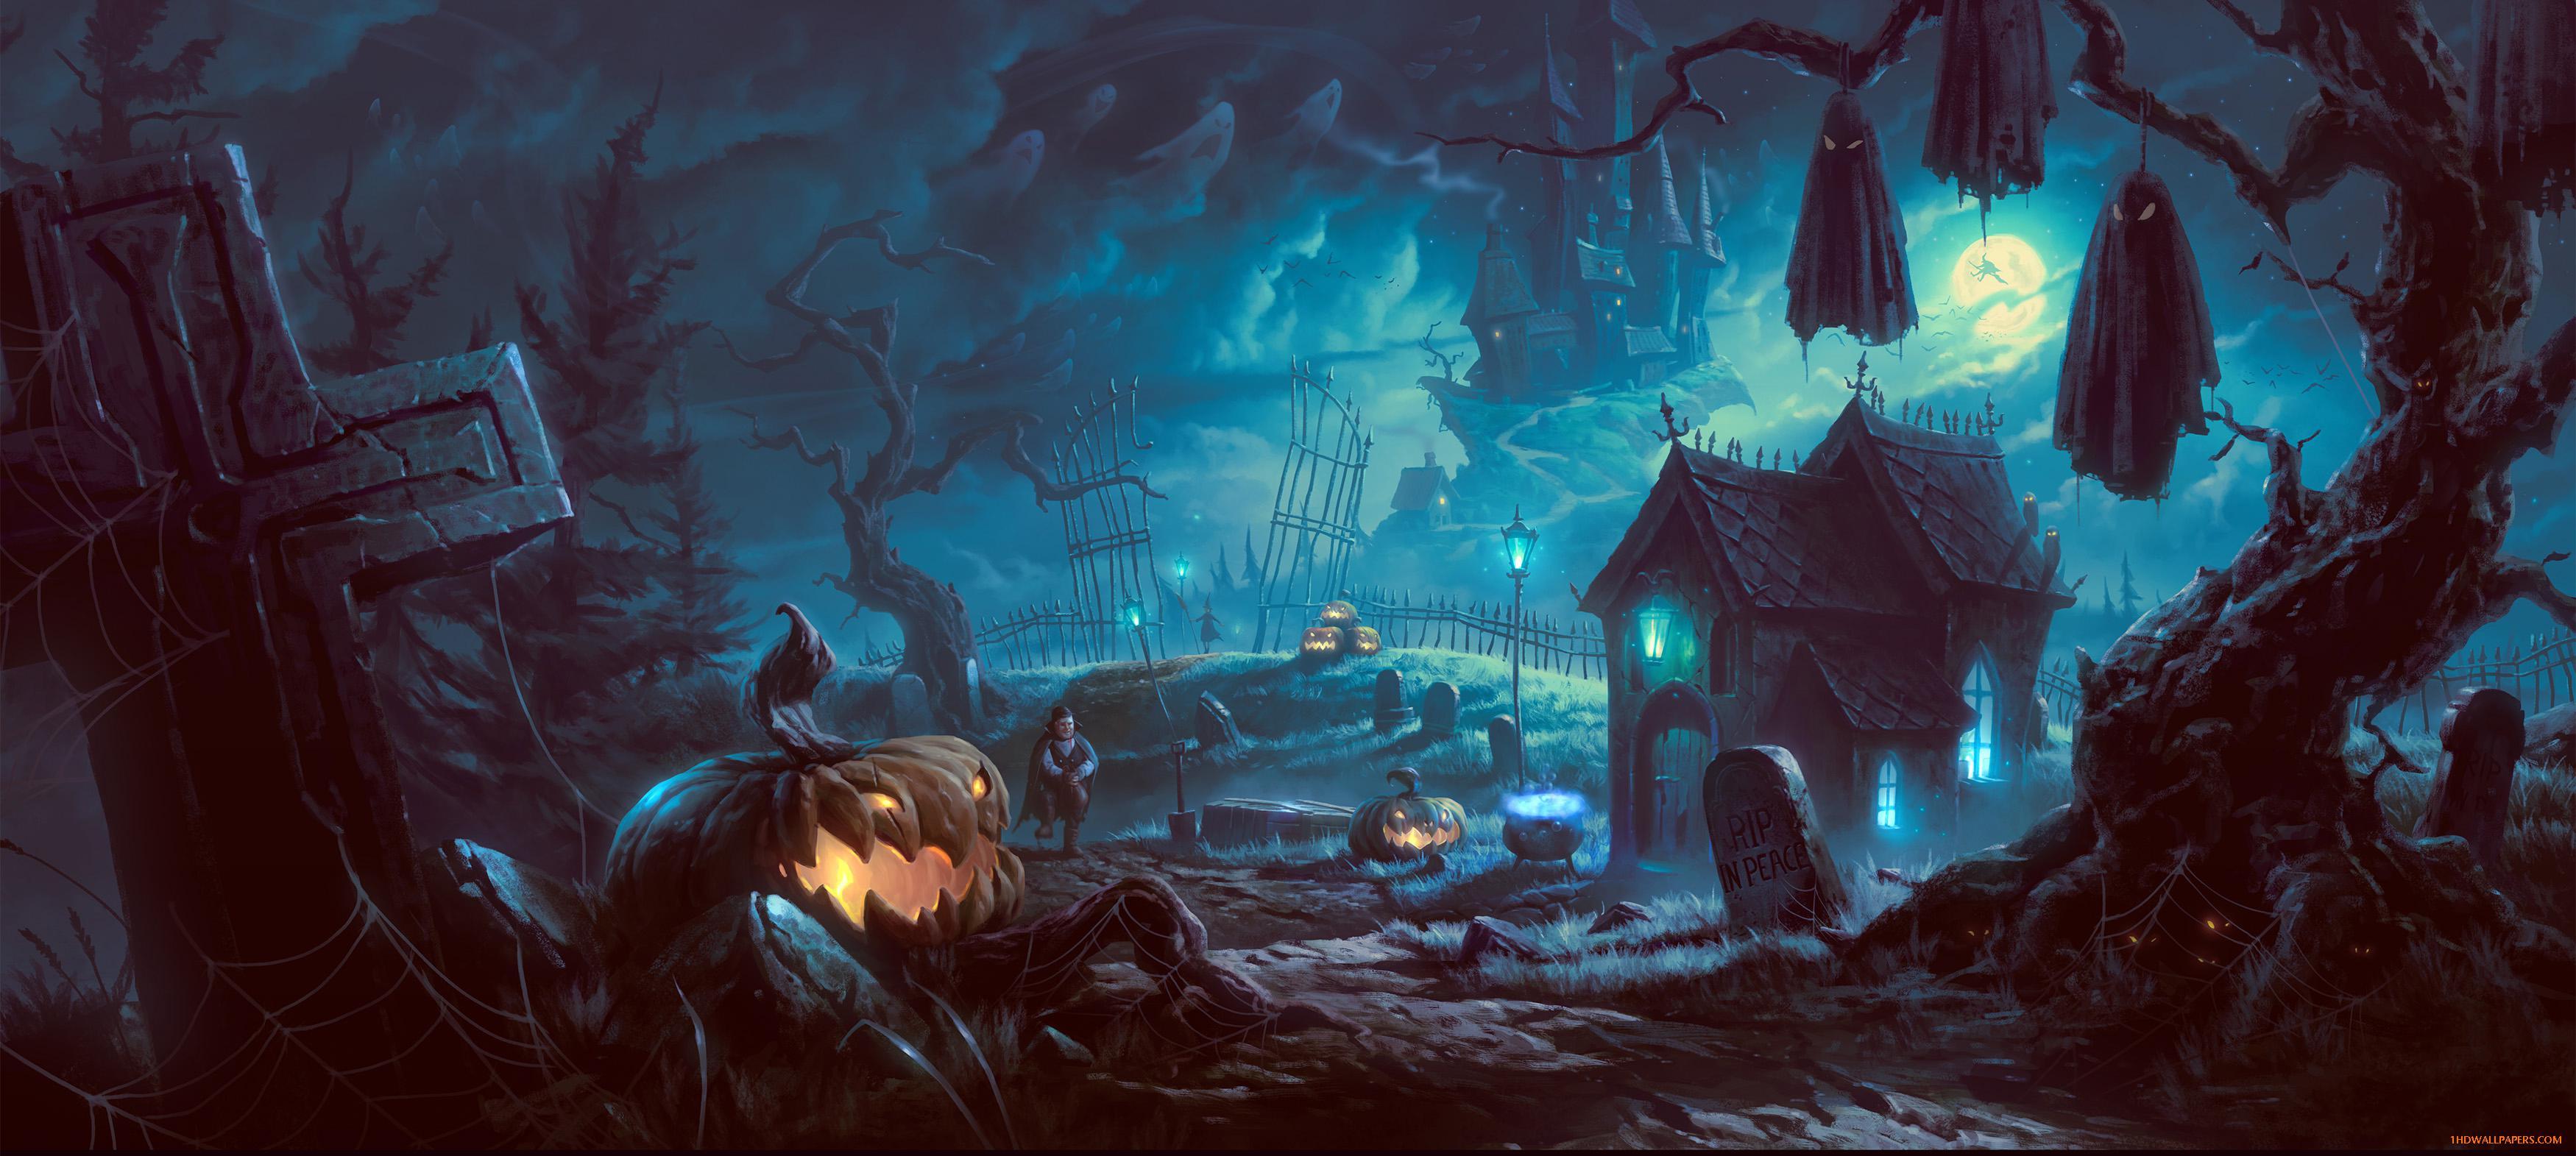 Halloween Horror Wallpaper Free Halloween Horror